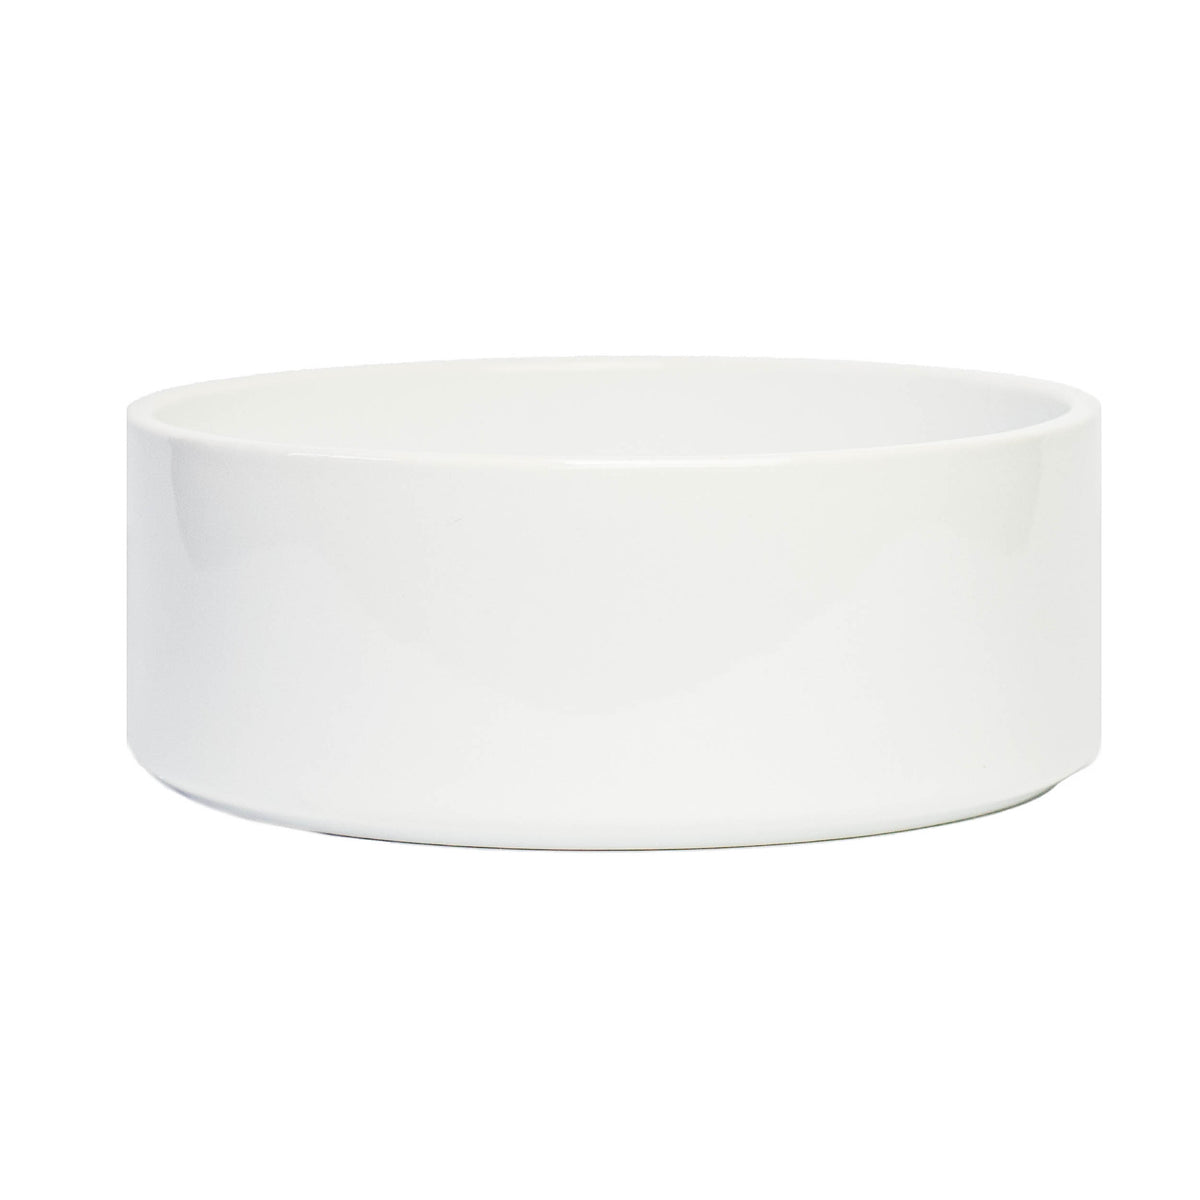 Personalised bowl for cats / ceramic - 22oz 650ml (design 6)